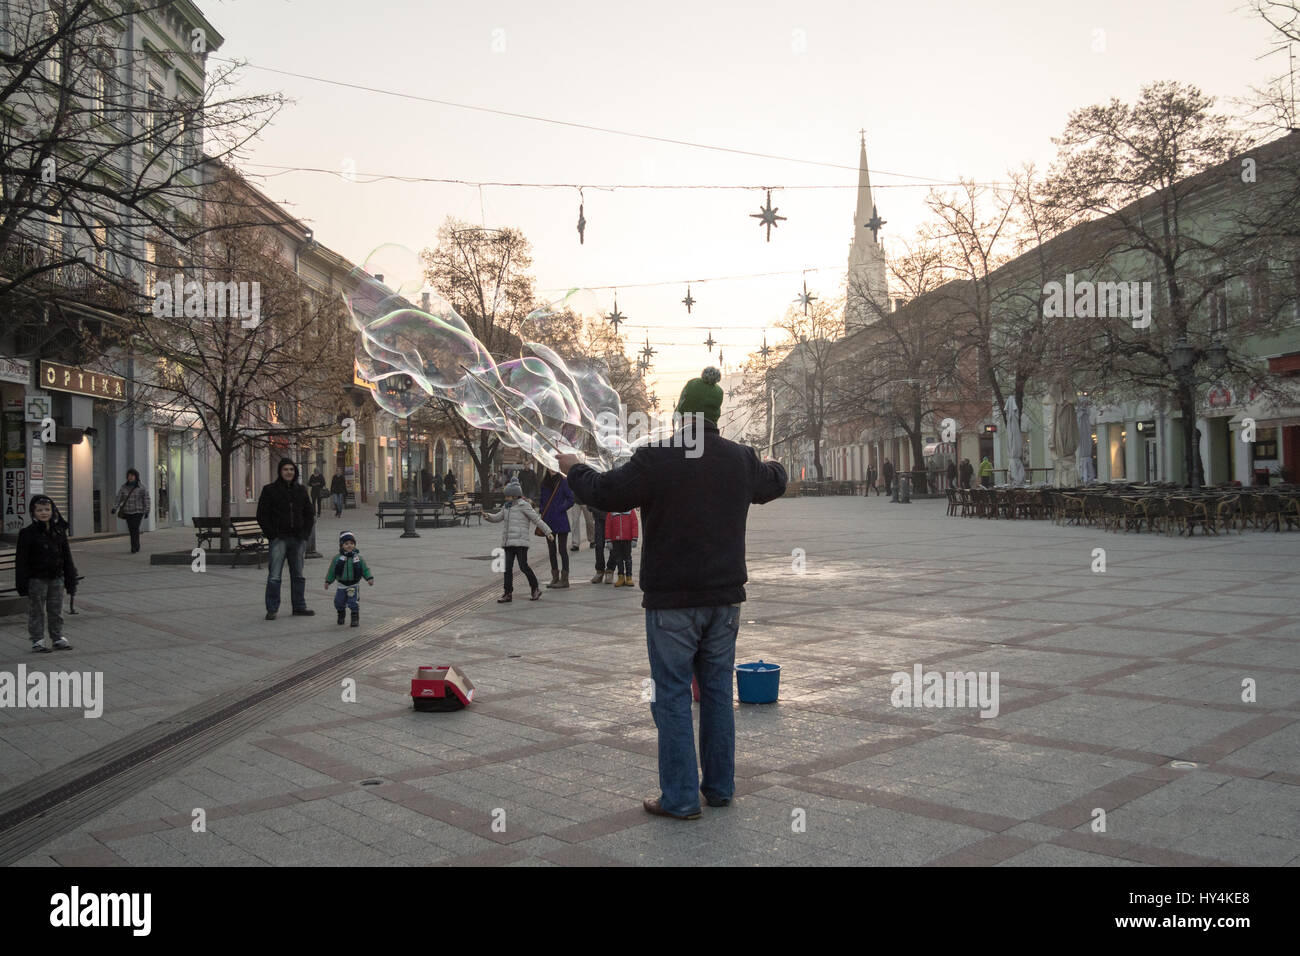 NOVI SAD, SERBIA - DECEMBER 13, 2015: Street performer making soap bubbles in order to amuse people passing by pn Novi Sad main street, Zmaj Jovina  S Stock Photo